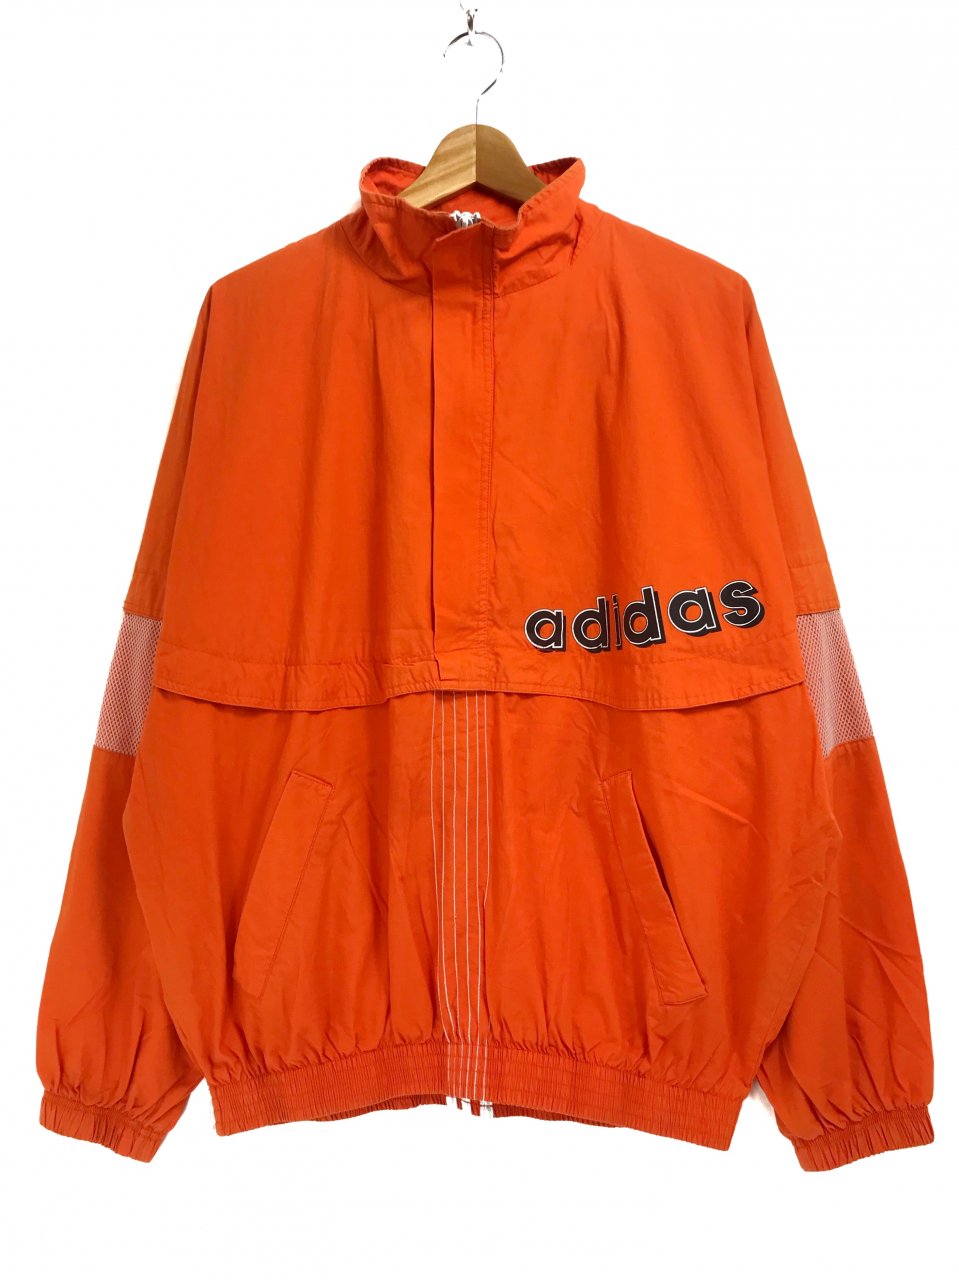 90s adidas Cotton-Nylon Half-Zip Pullover Jacket オレンジ S